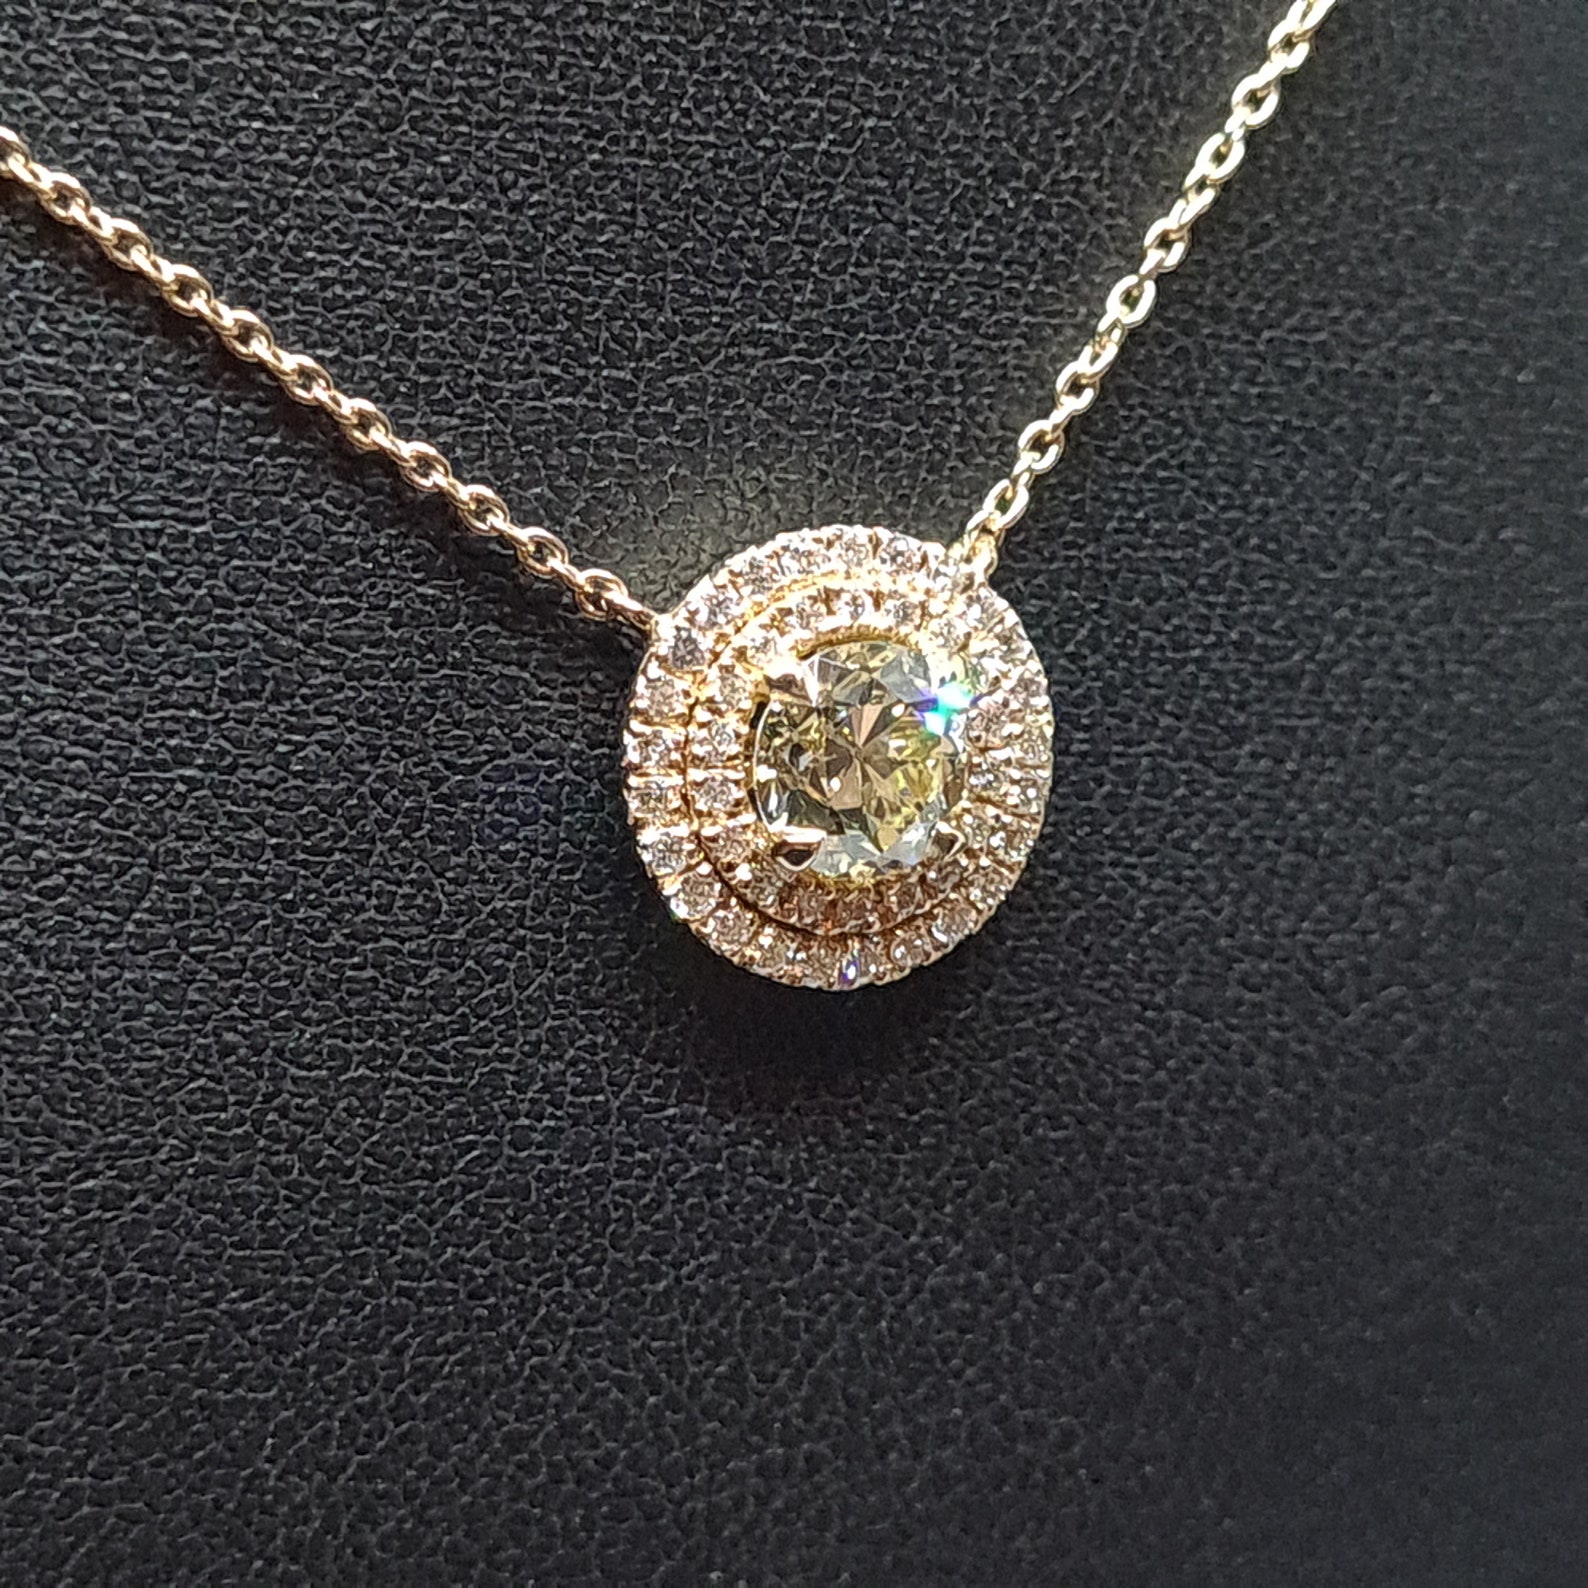 Diamond necklace 1.02 carat rose gold 18 carats 750/1000 4.73 | Etsy